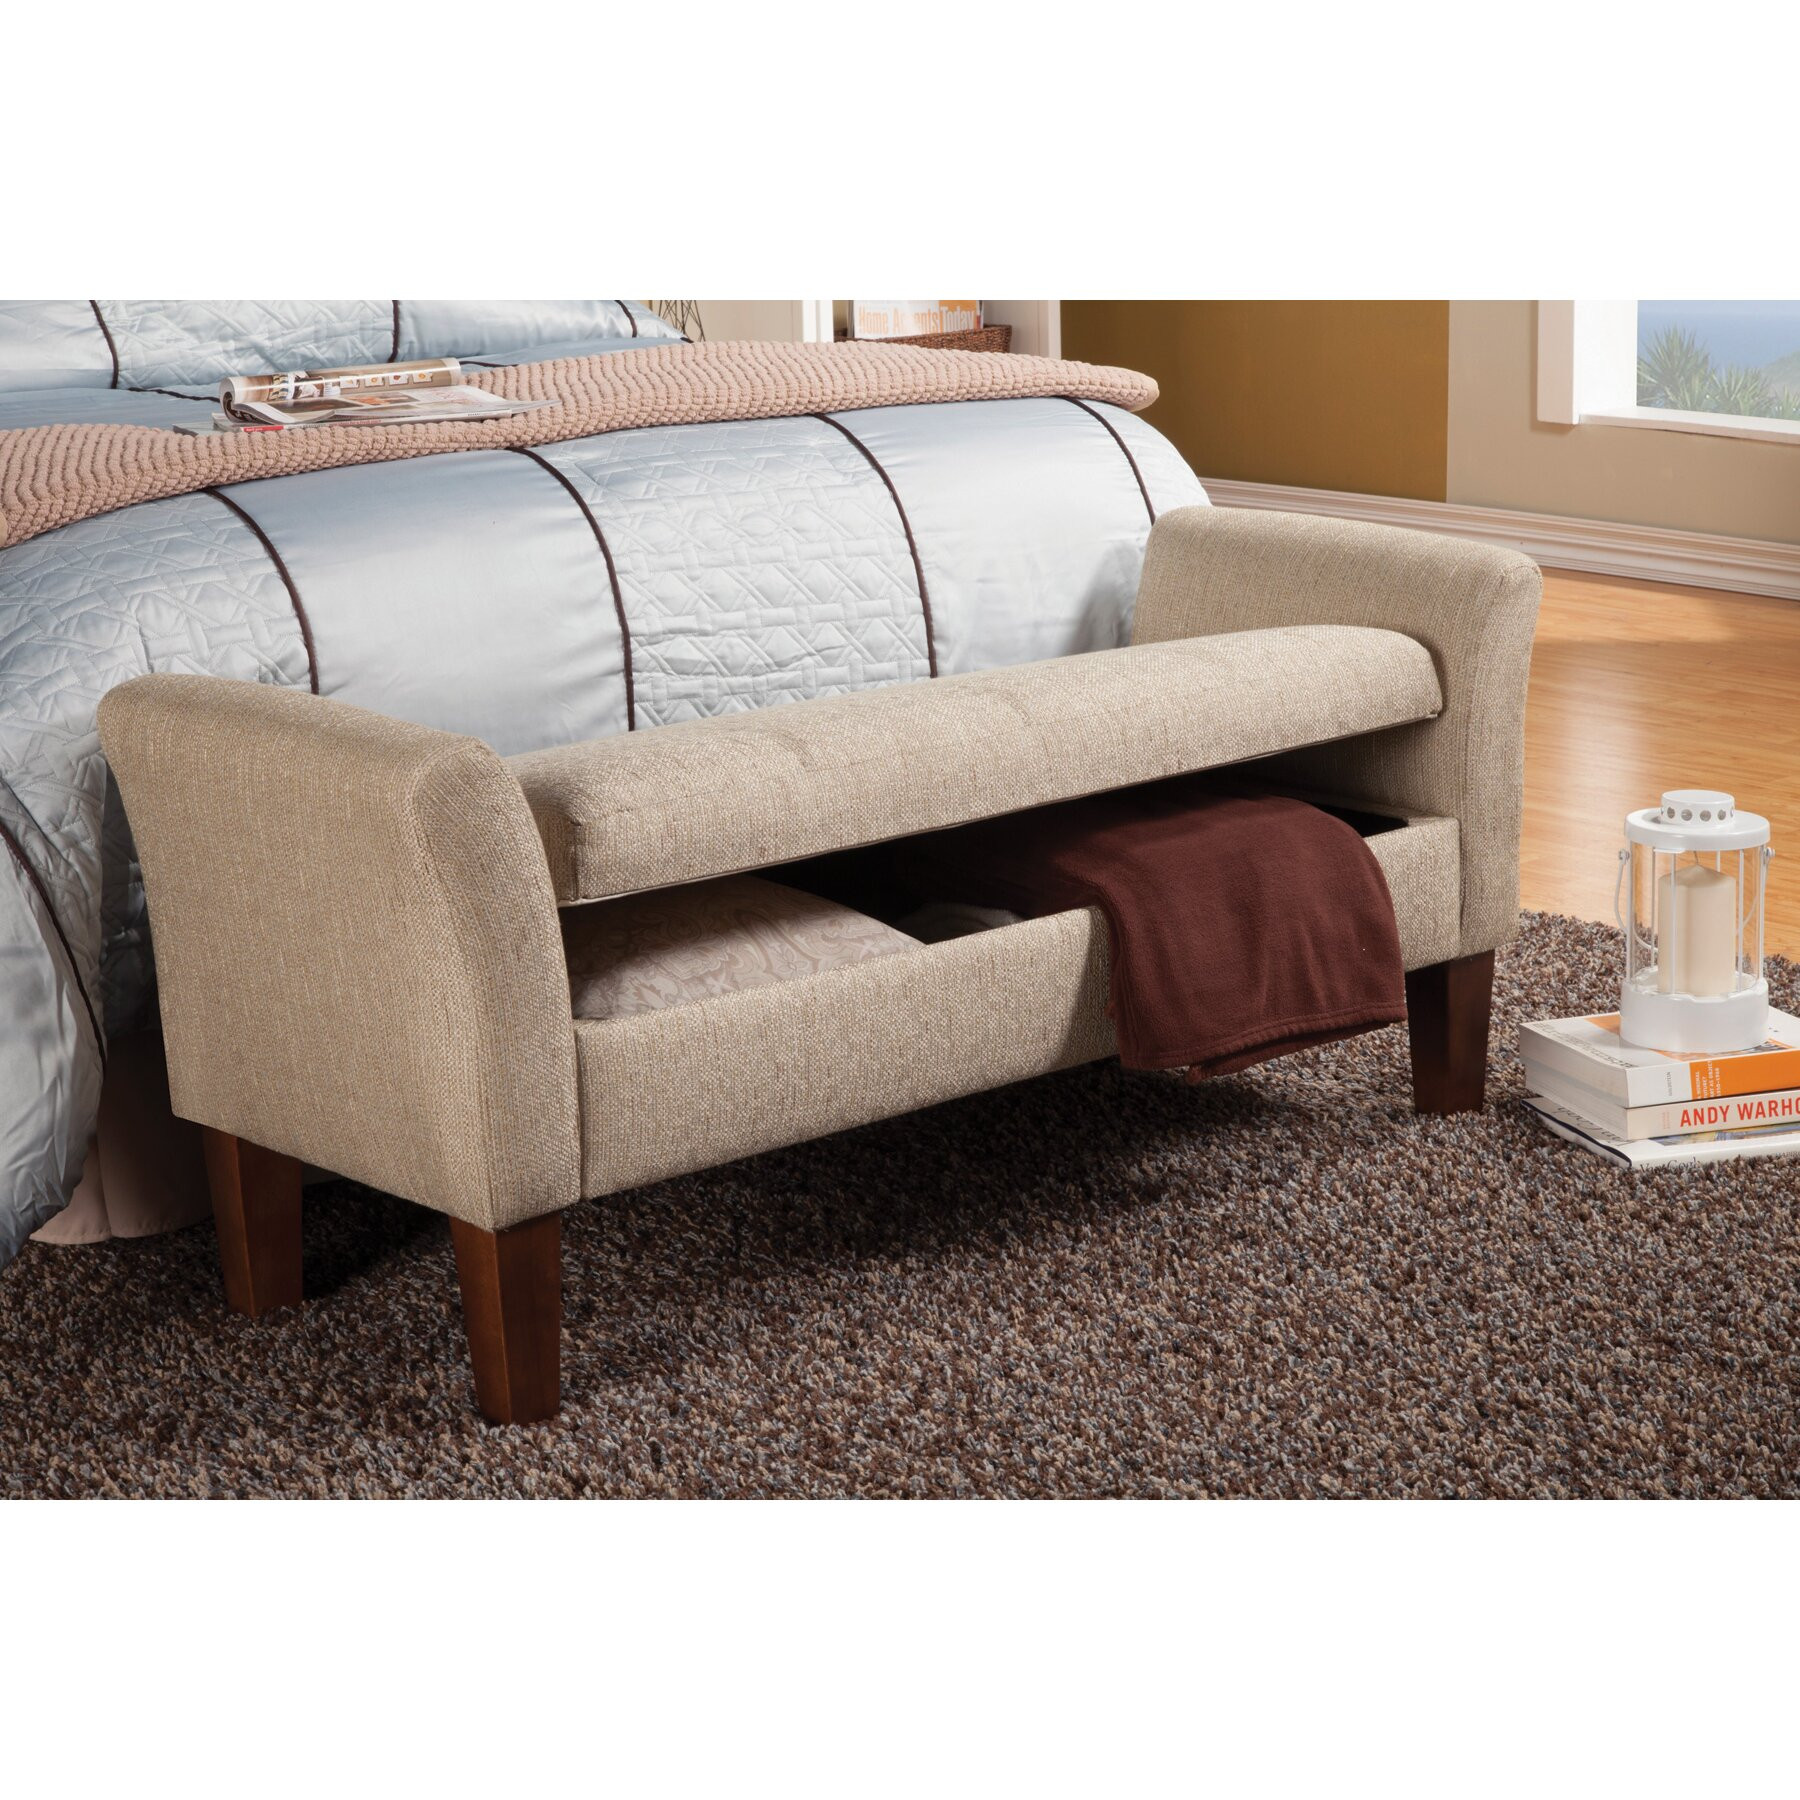 Storage Bench Bedroom
 Wildon Home Upholstered Storage Bedroom Bench & Reviews